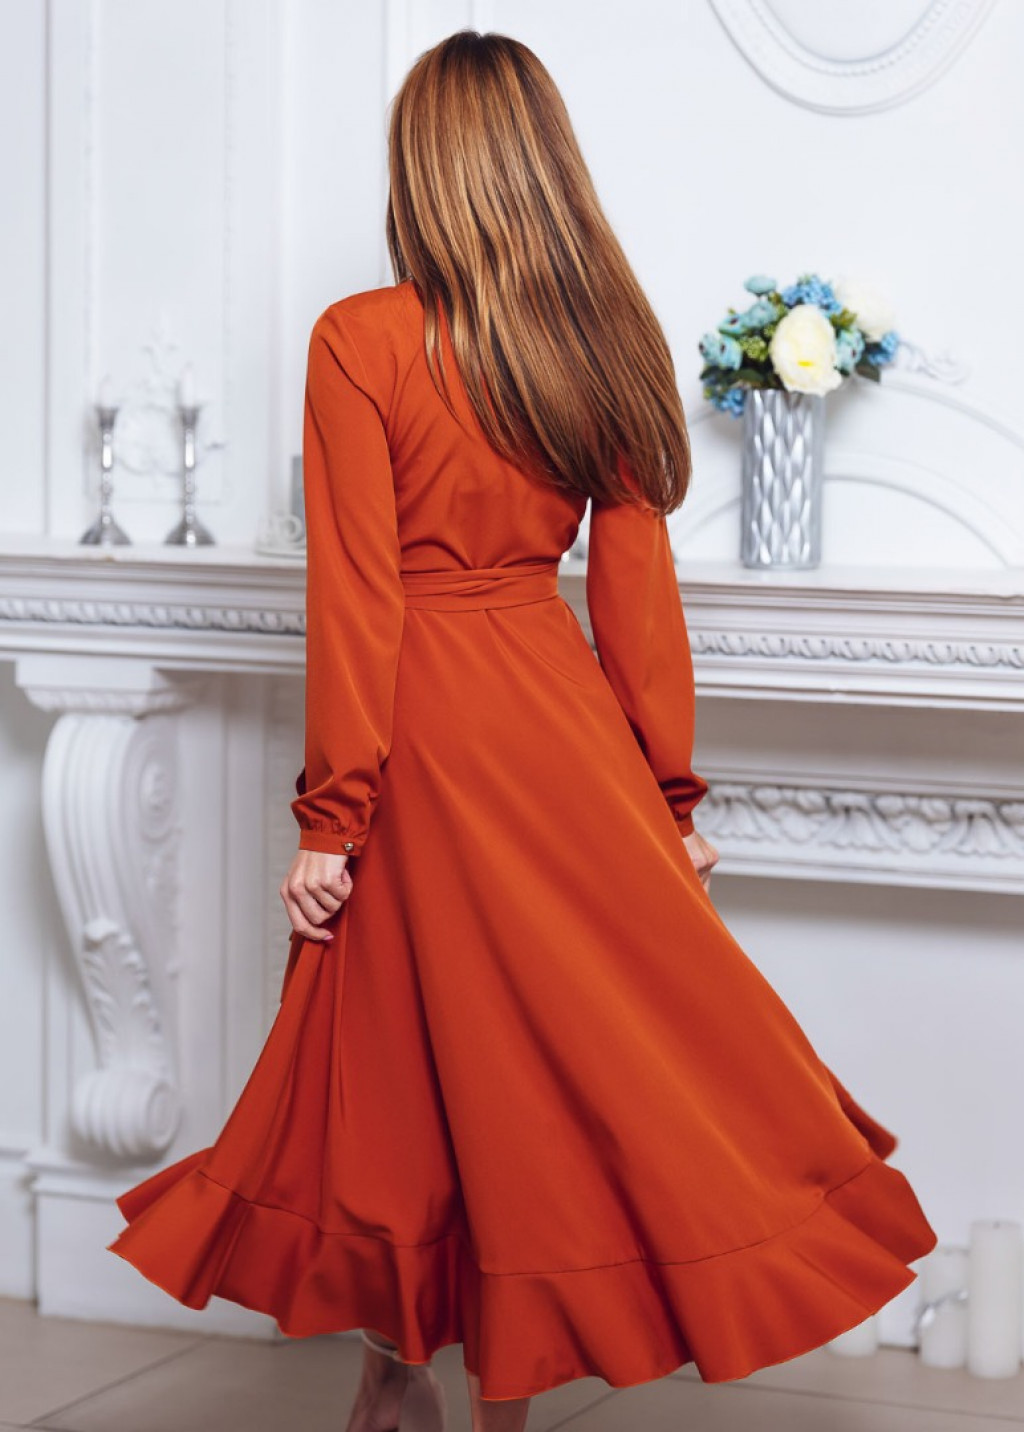 Rust orange wrap dress